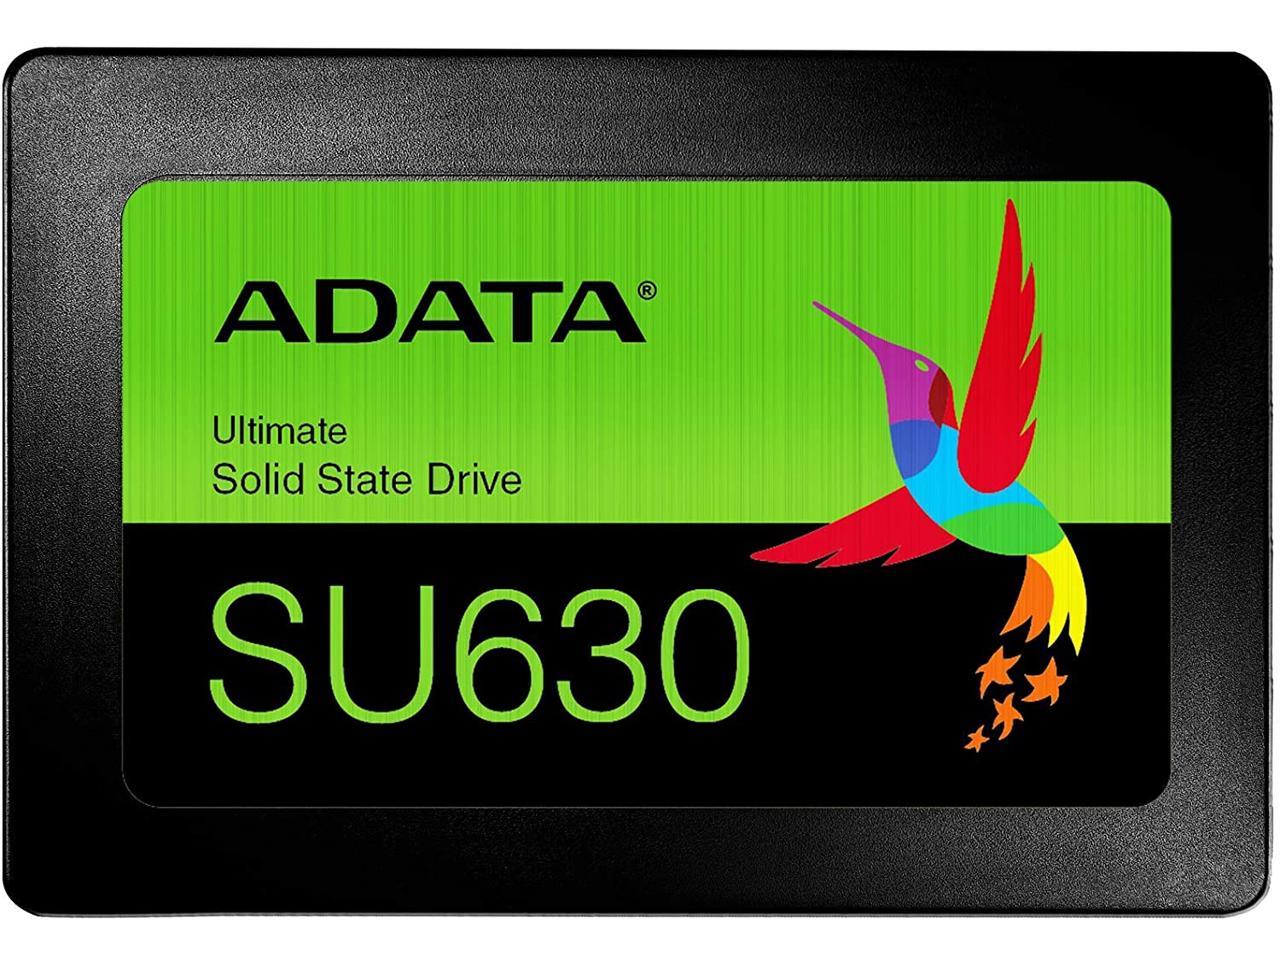 ADATA Ultimate Series: SU630 960GB Internal SATA Solid State Drive